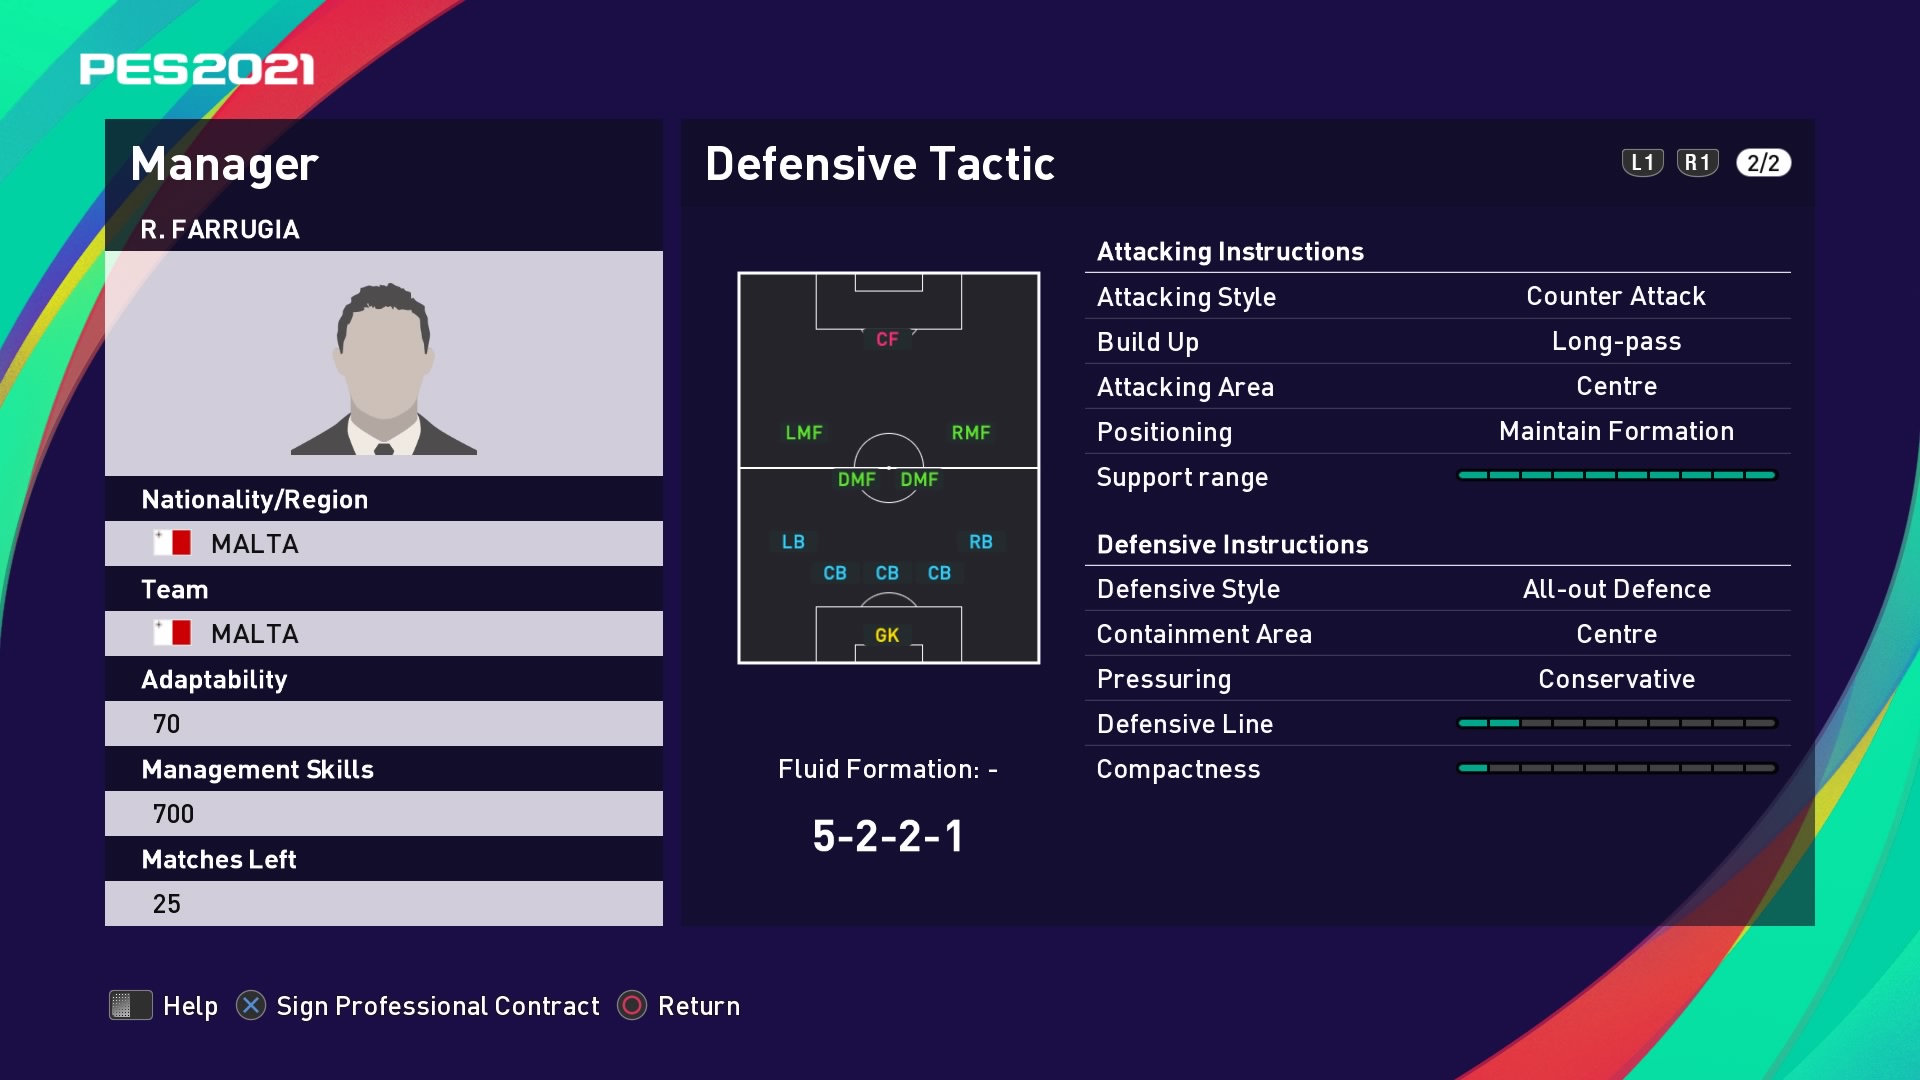 R. Farrugia (Ray Farrugia) Defensive Tactic in PES 2021 myClub